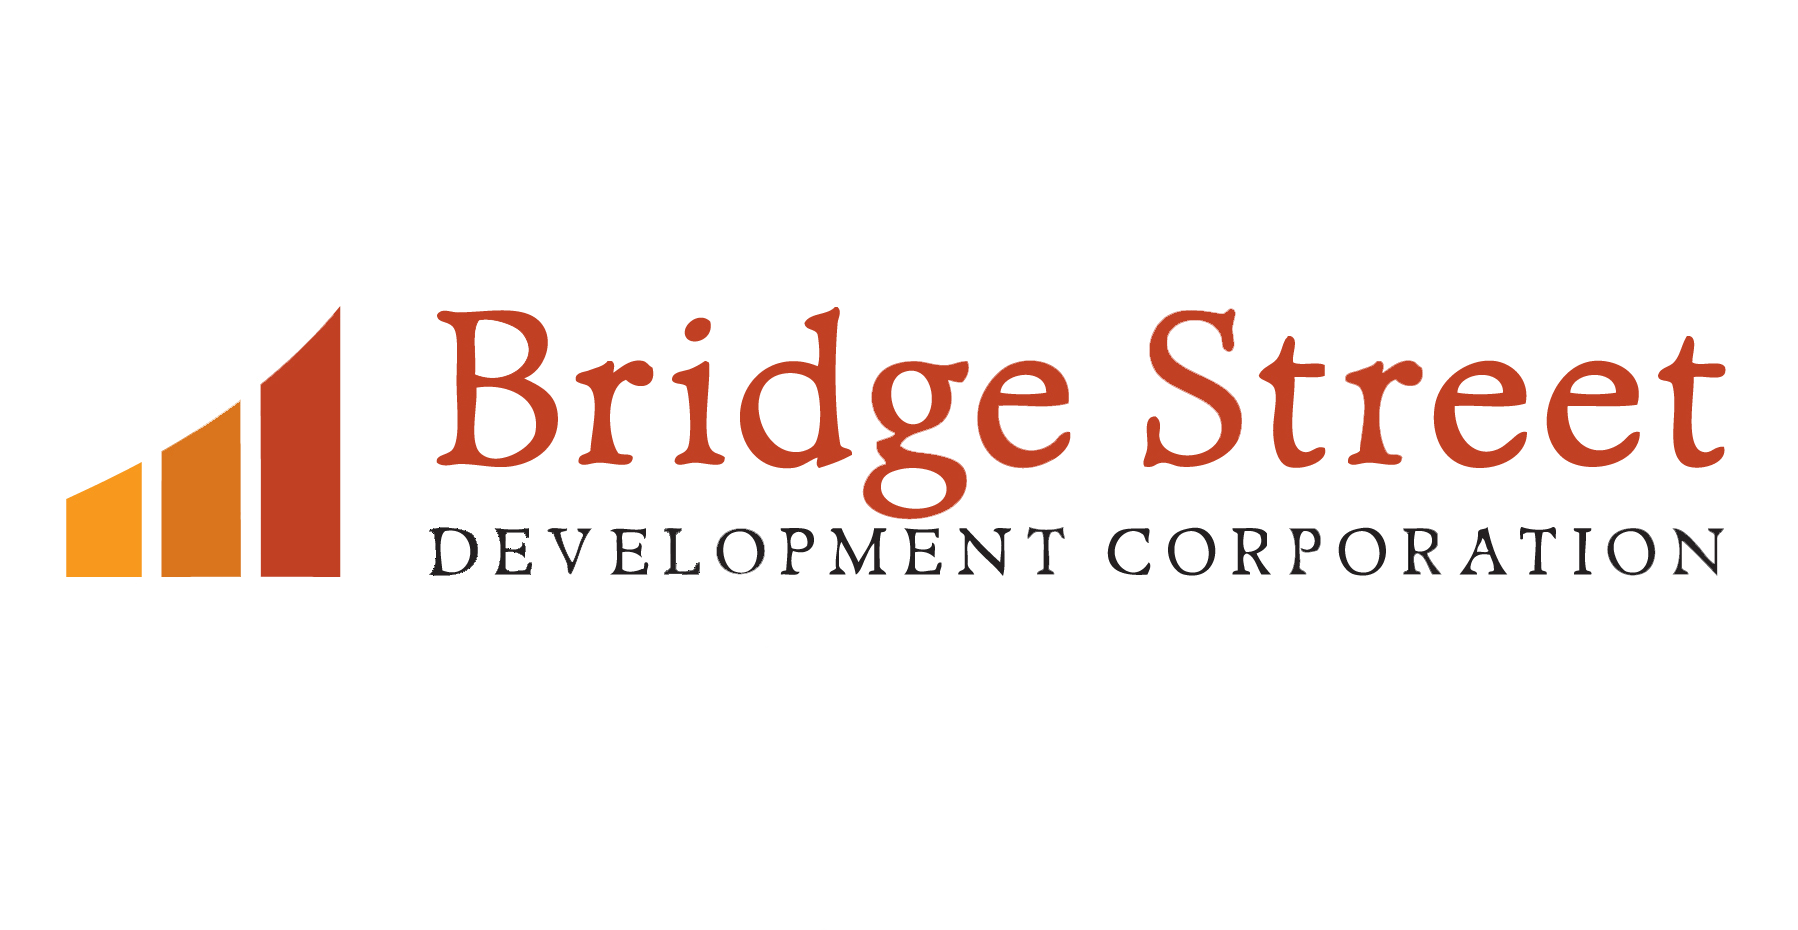 Bridge Street Development Corporation